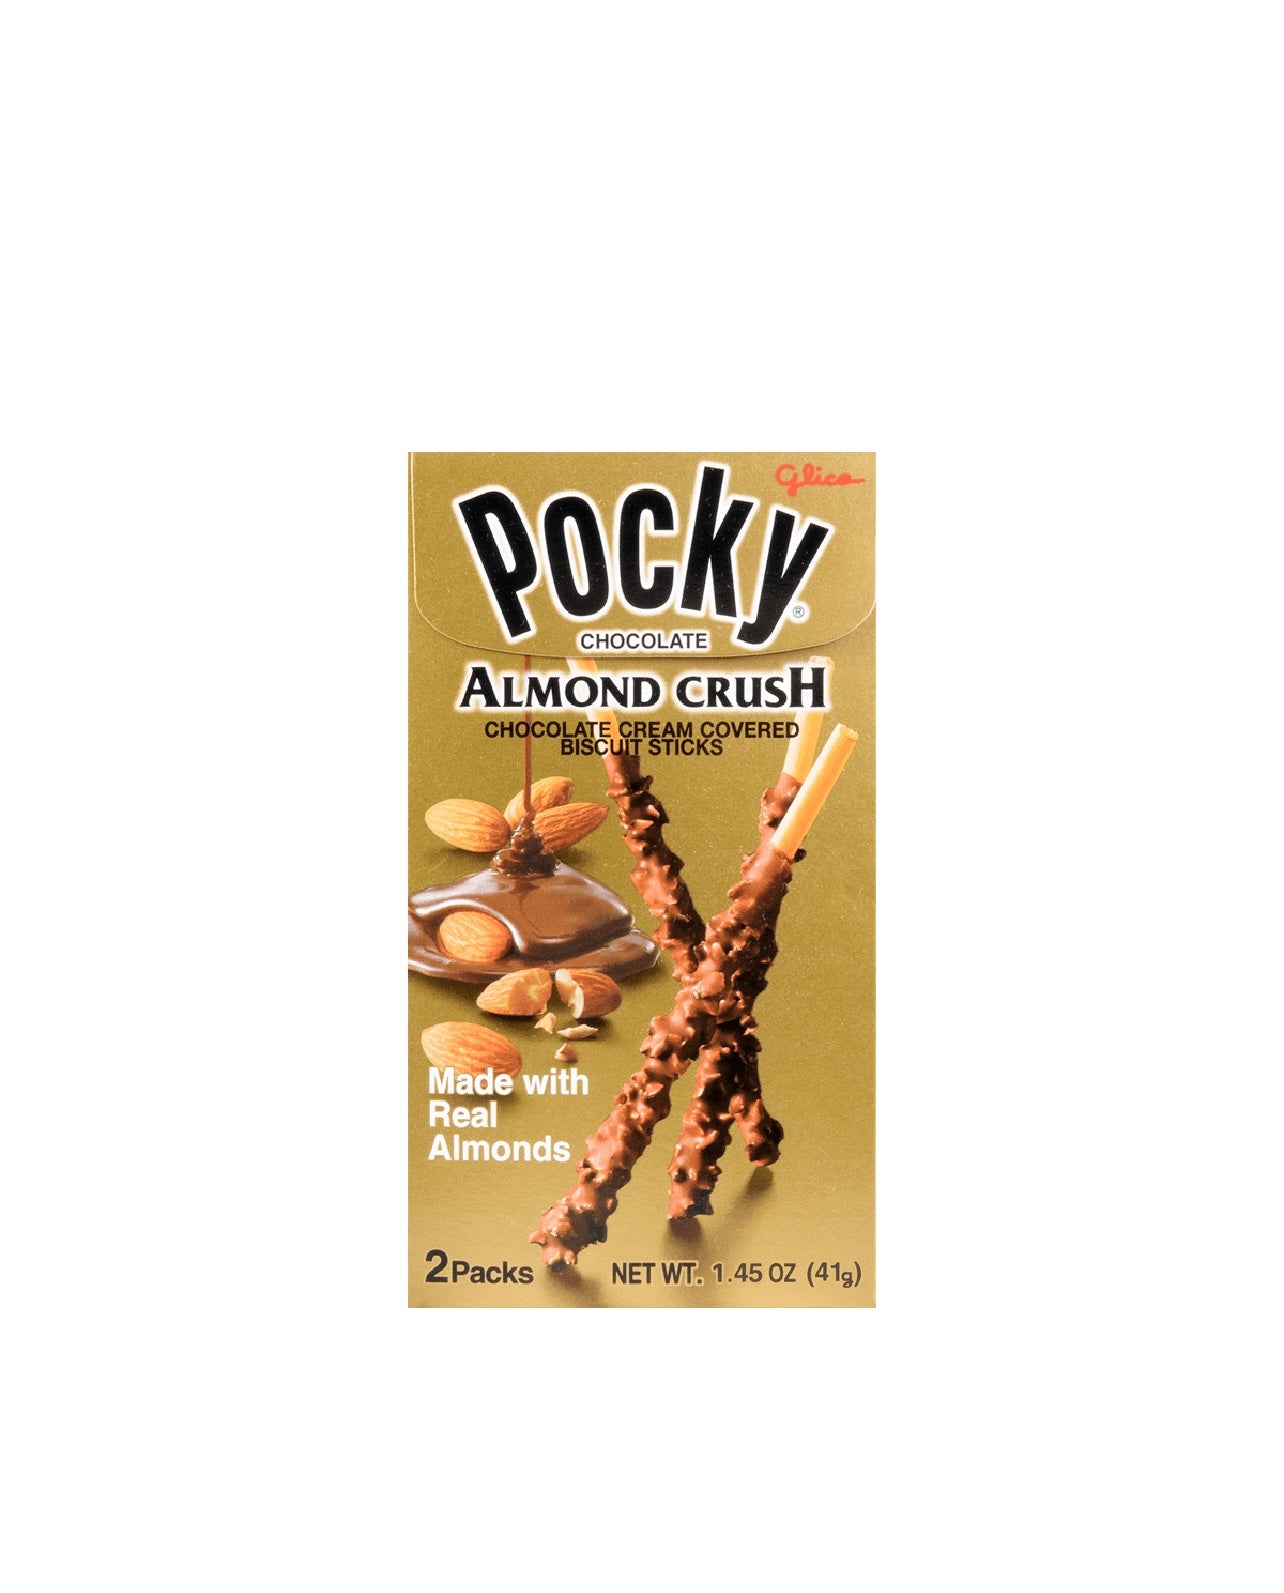 GLICO Almond Crush Pocky Chocolate Cookie Sticks,
1.45oz